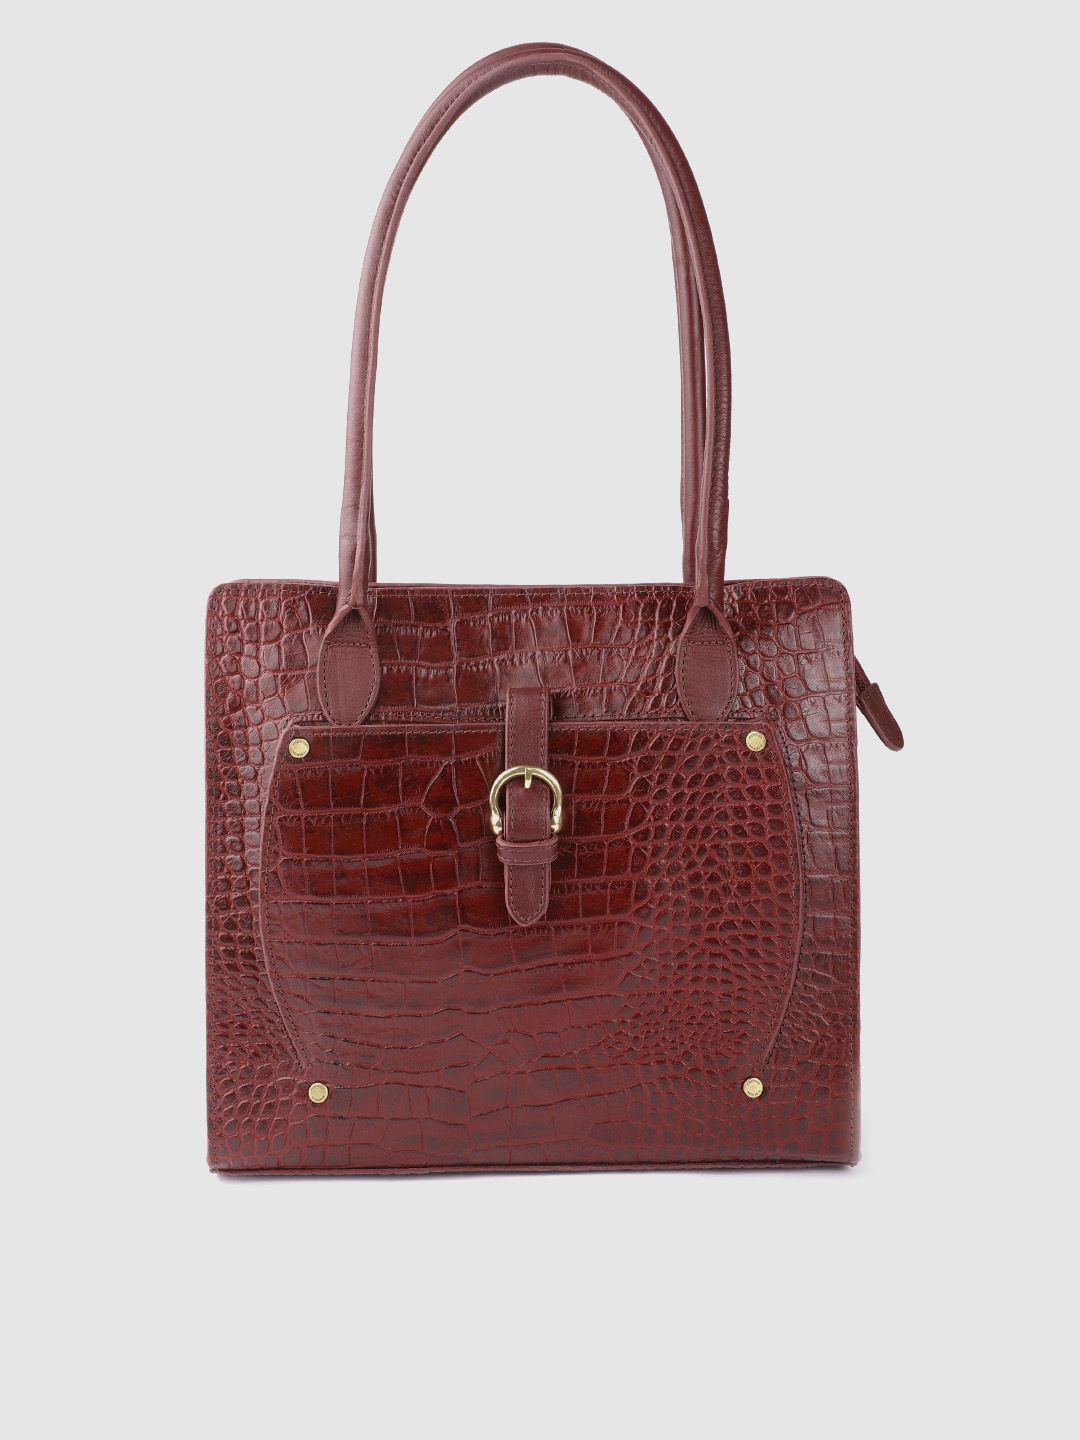 Hidesign Women Maroon Croc-Textured Leather Shoulder Bag Price in India